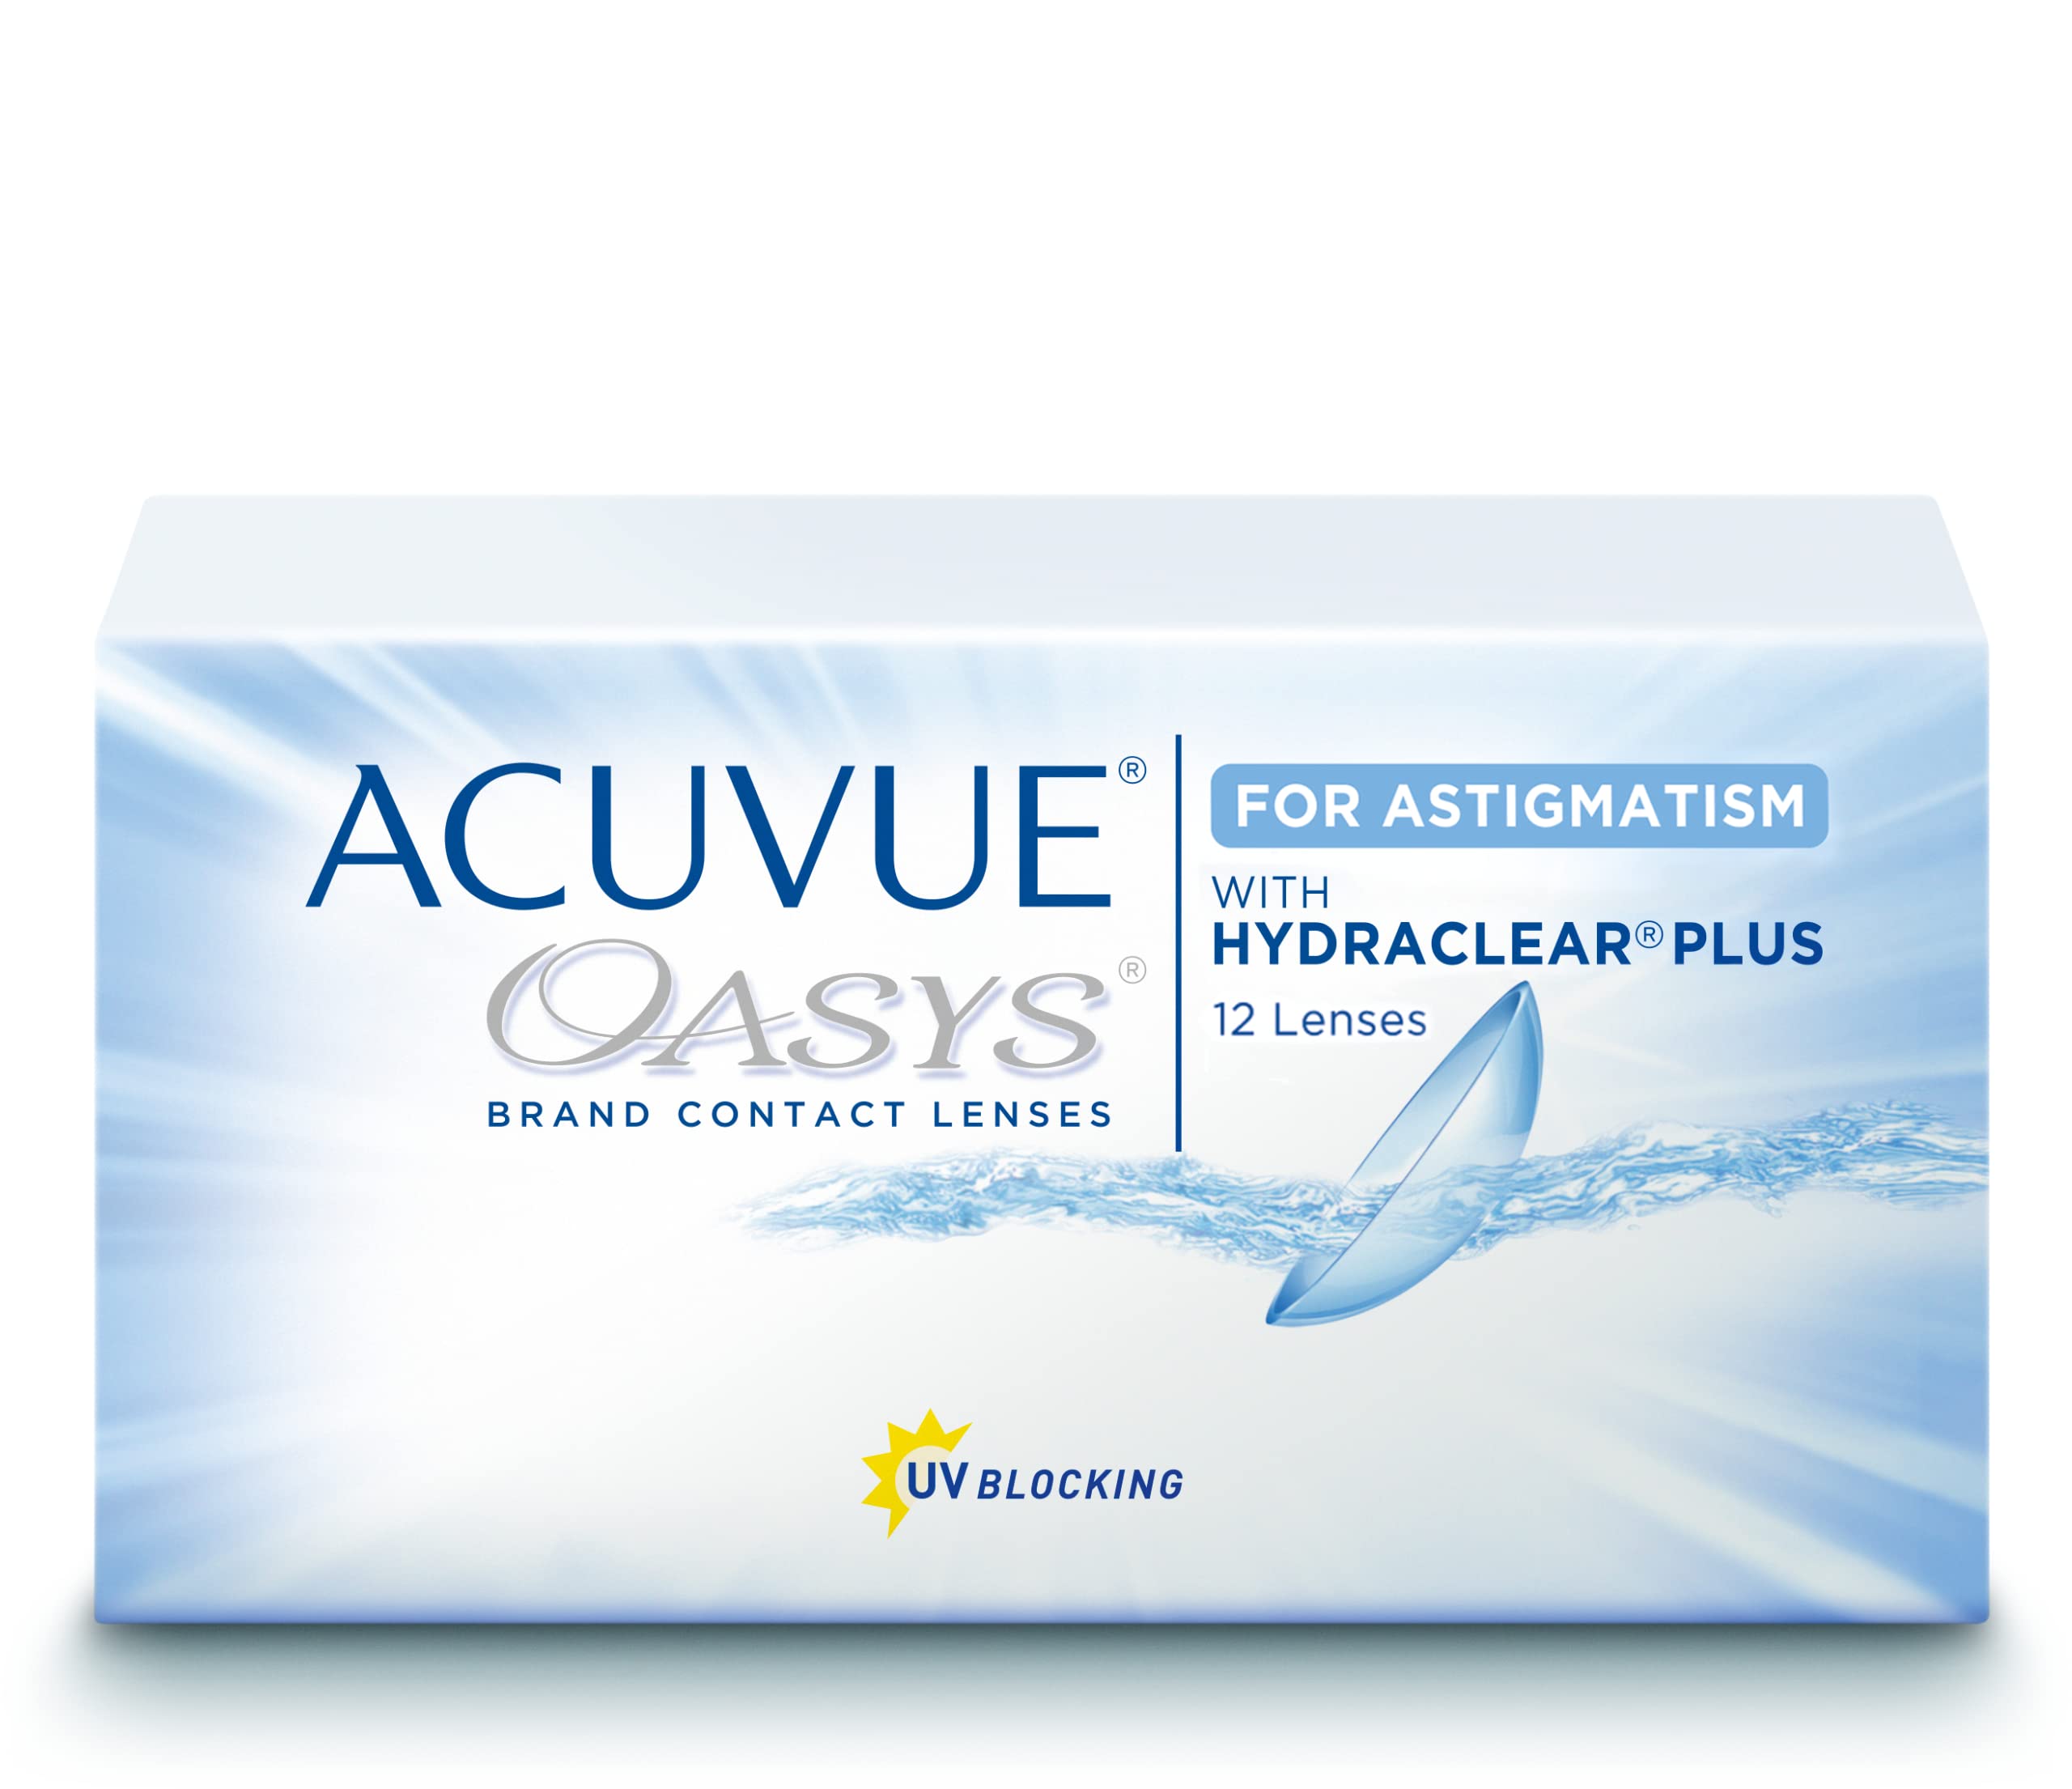 Acuvue Oasys for Astigmatism 2-Wochenlinsen weich, 12 Stück/BC 8.6 mm/DIA 14.5 / CYL -2.75 / Achse 30 / -5.25 Dioptrien